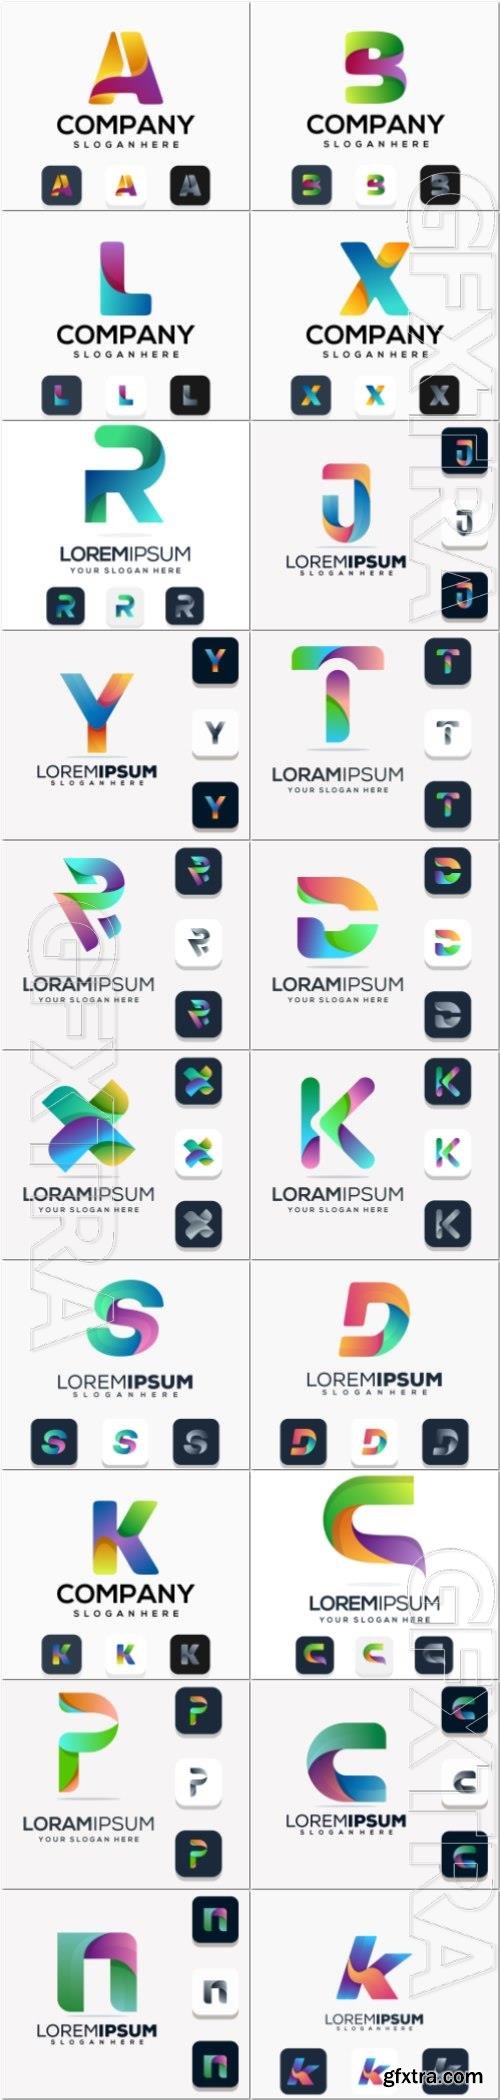 Modern logo design premium vector